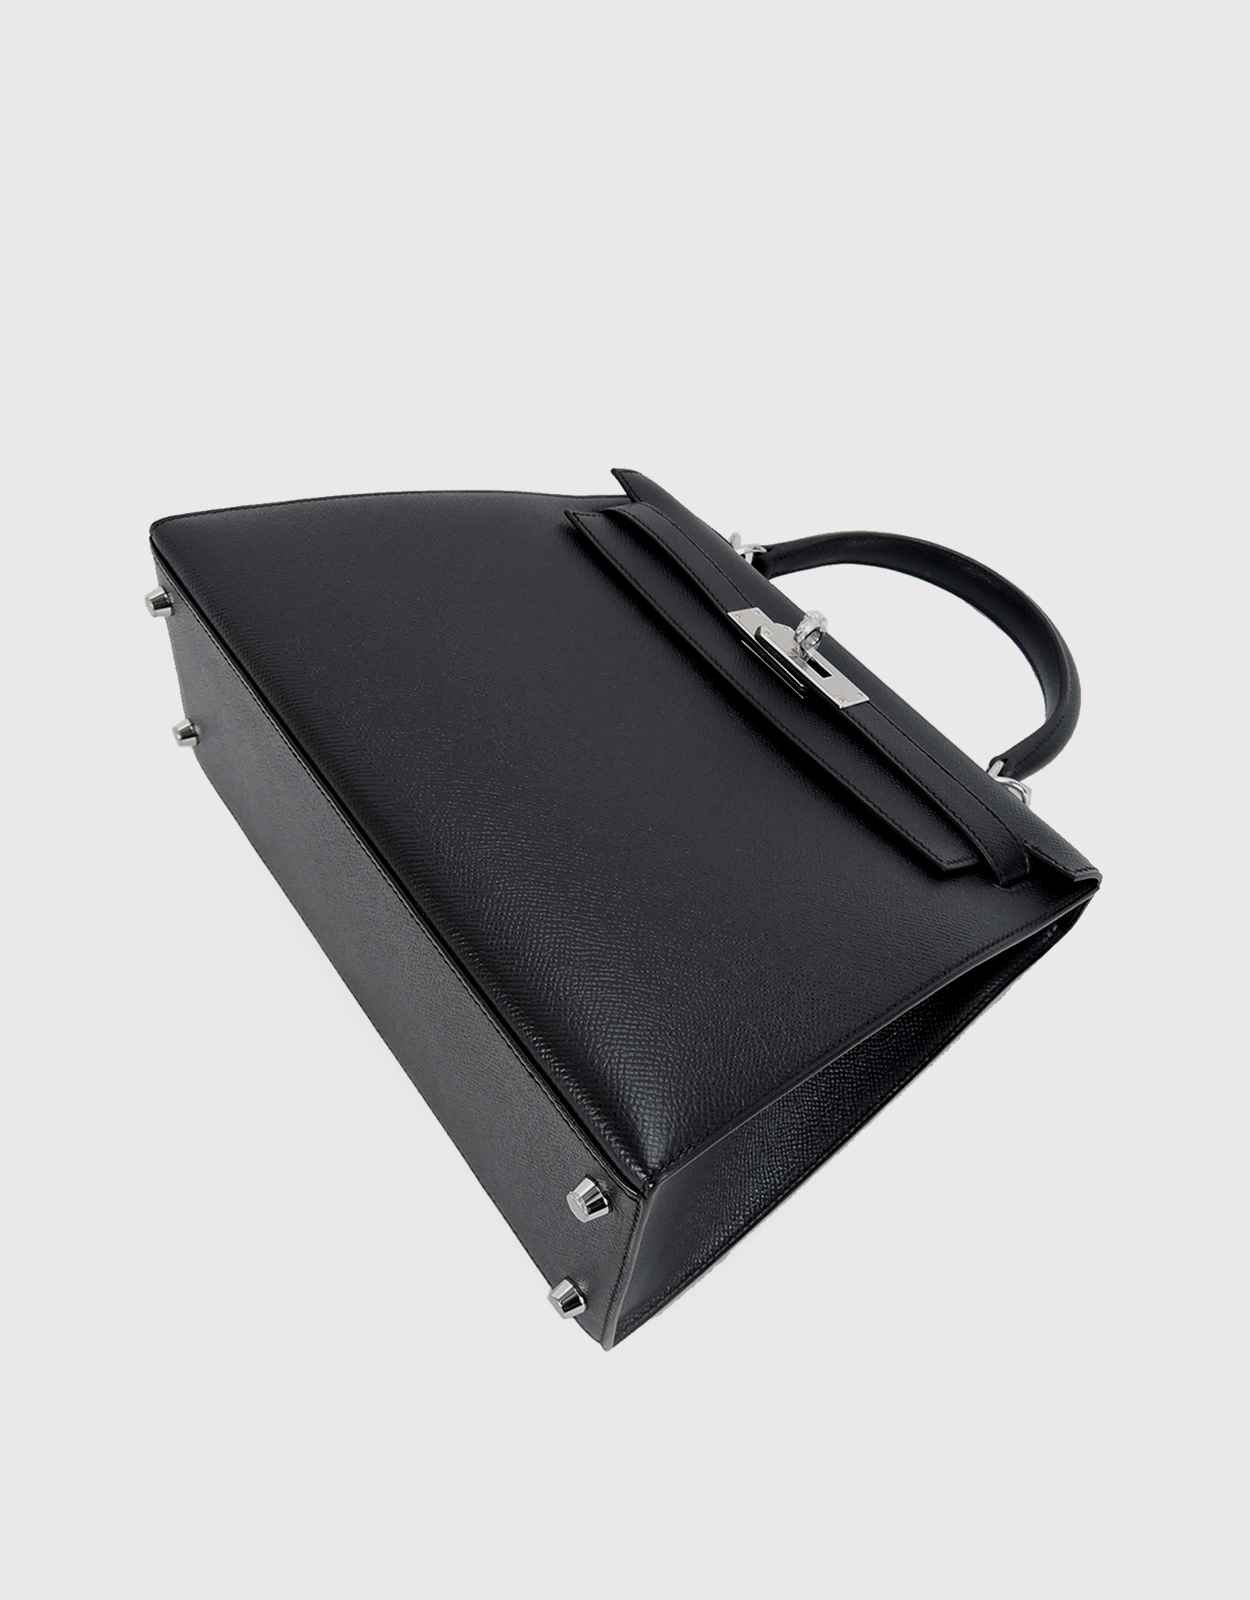 Hermès Kelly 28 cm Handbag in Biscuit Epsom Leather